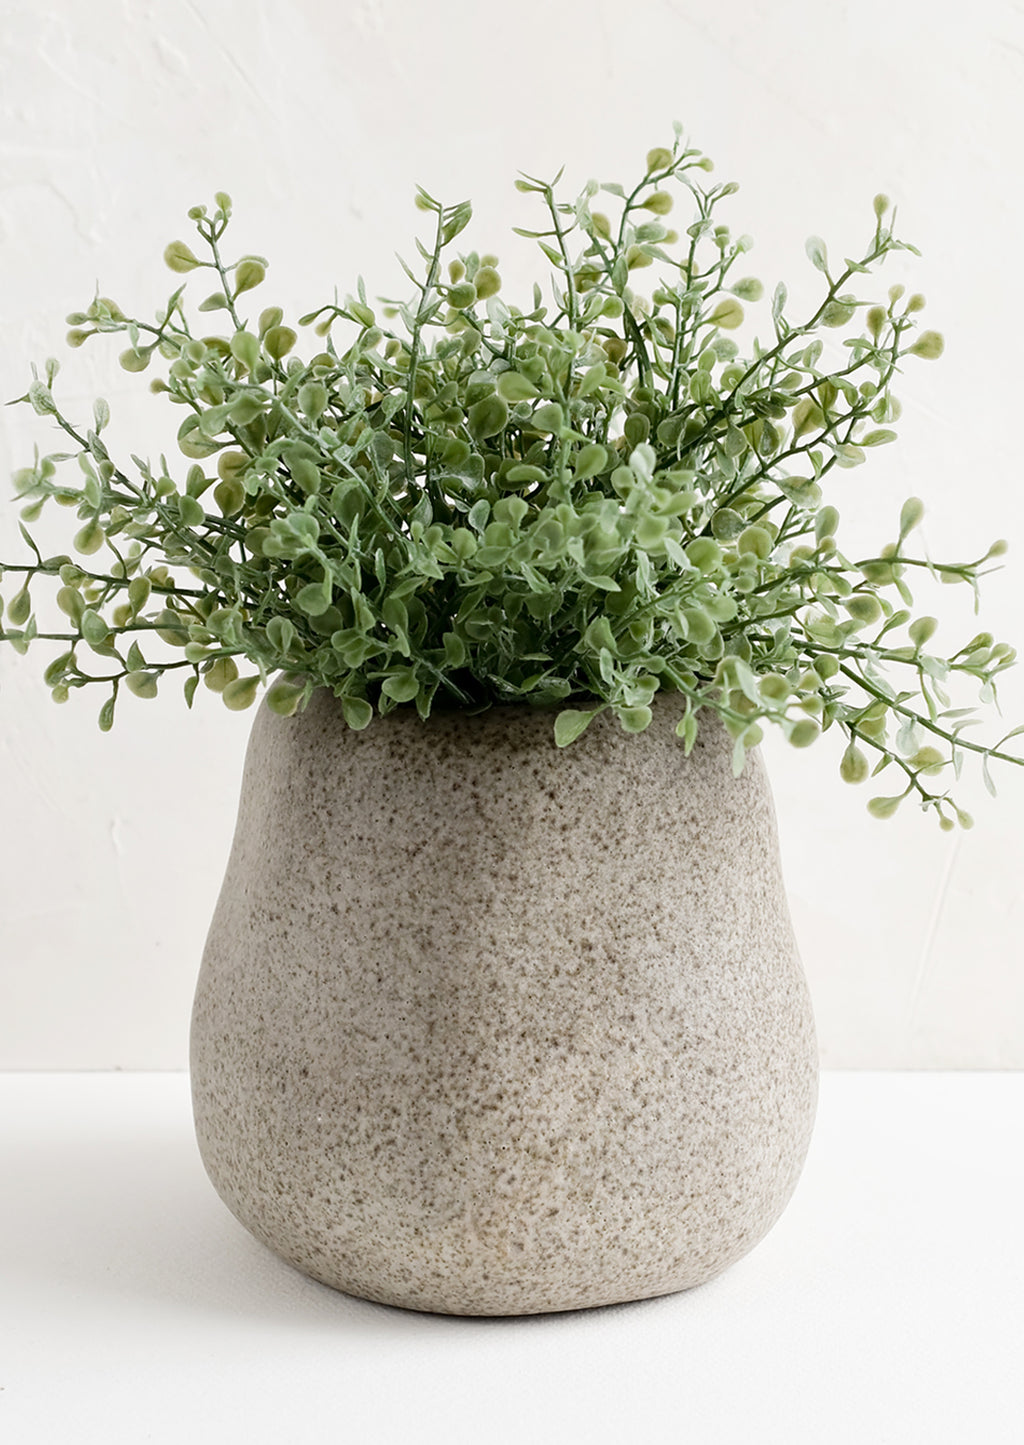 Short: A grey organically shaped ceramic planter with leafy plant.